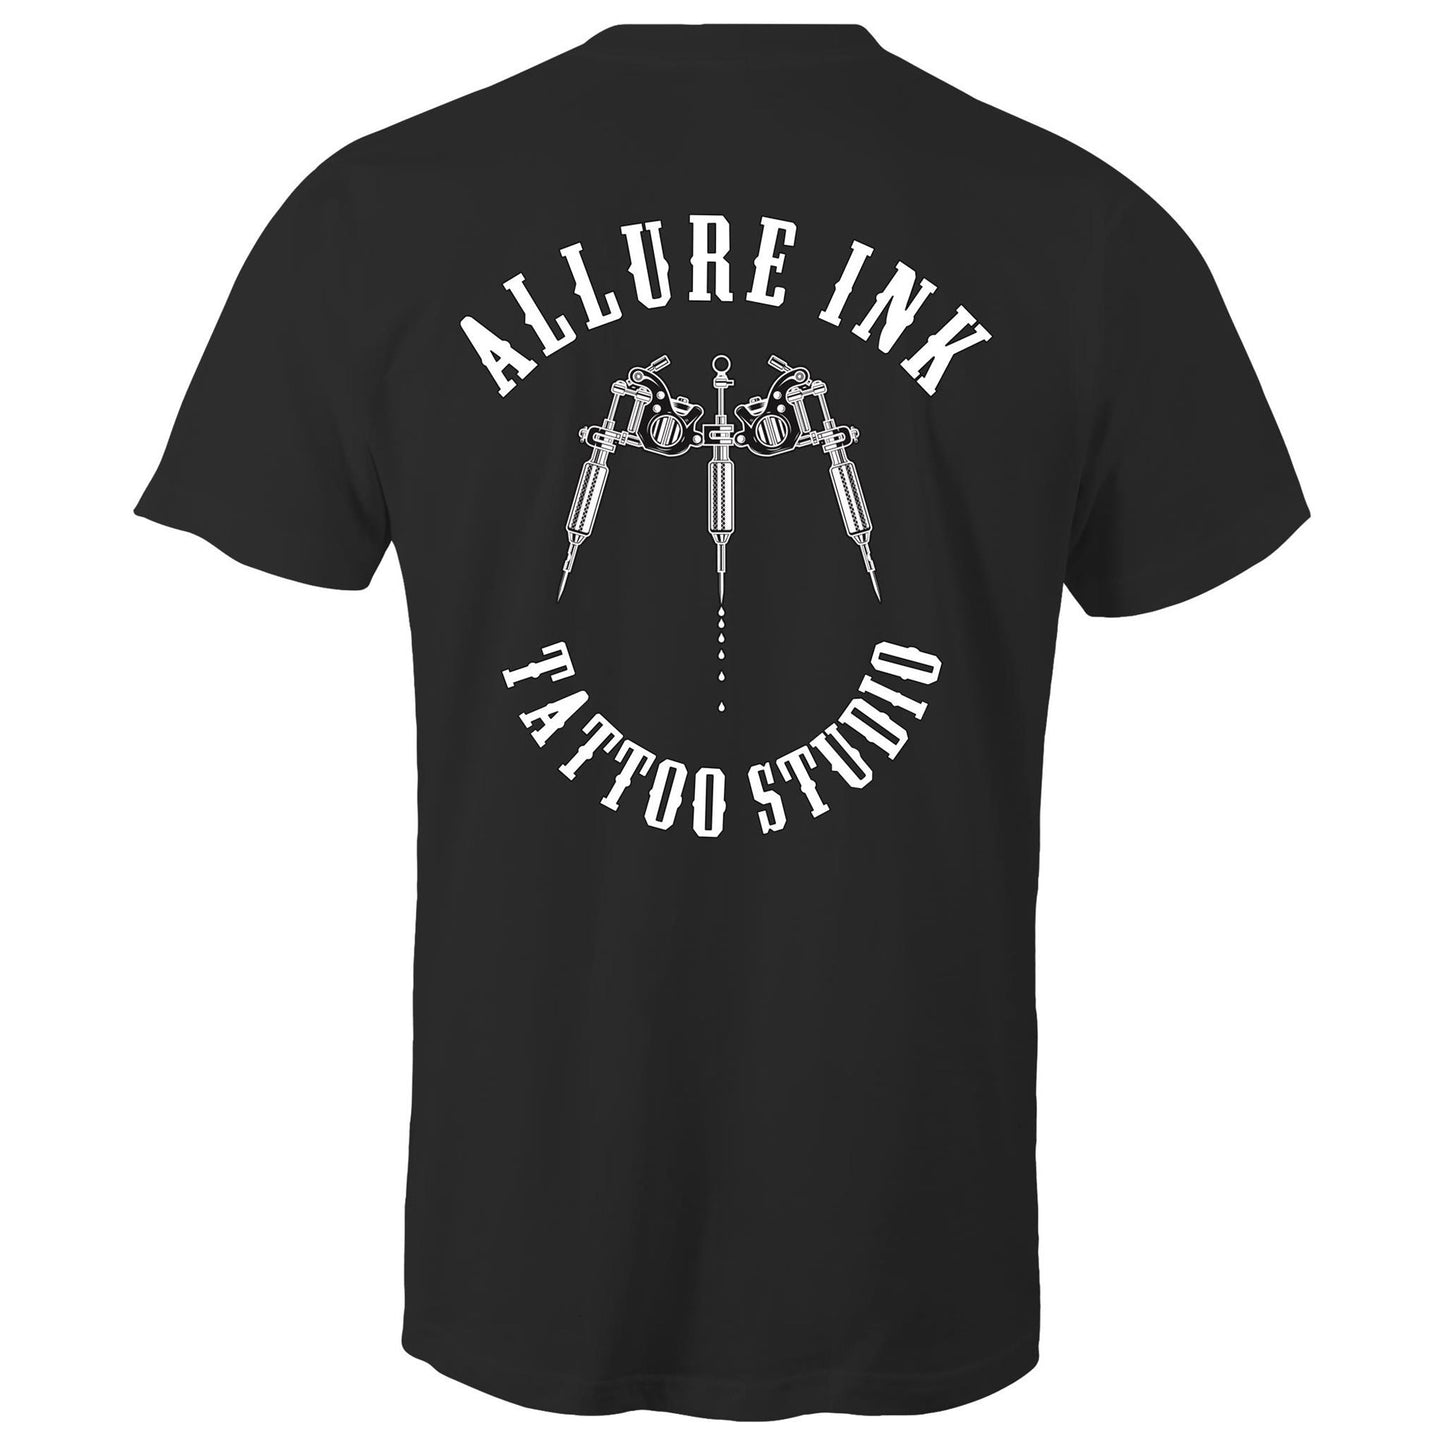 Allure 3 gun pocket logo with Allure ink circle banner on back.